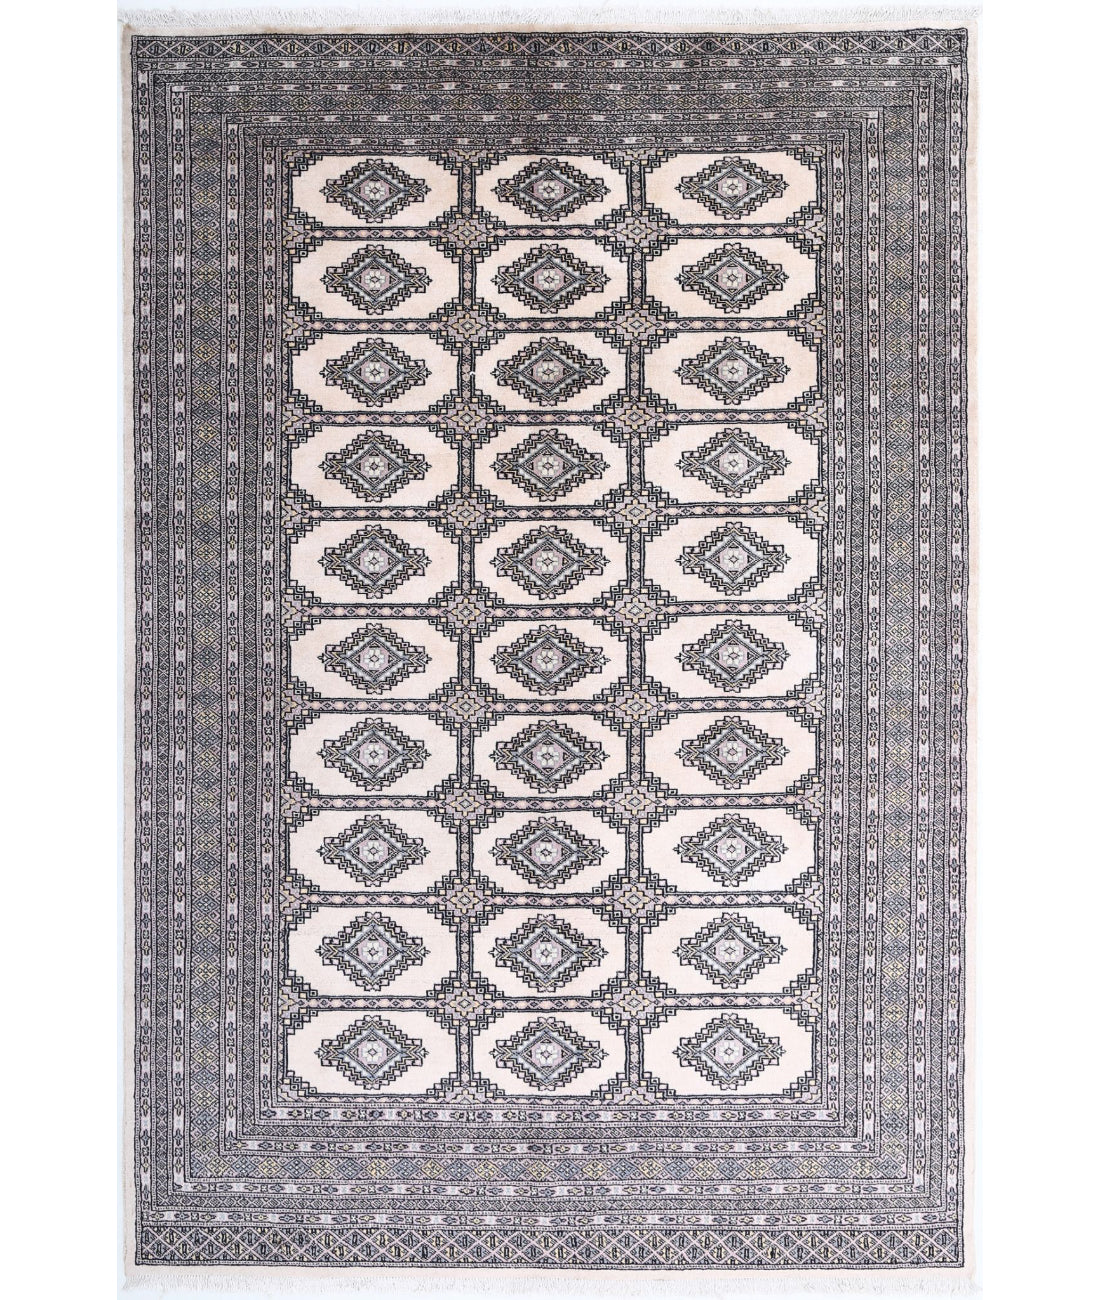 Hand Knotted Tribal Bokhara Wool Rug - 6'1'' x 8'11'' 6'1'' x 8'11'' (183 X 268) / Ivory / Black